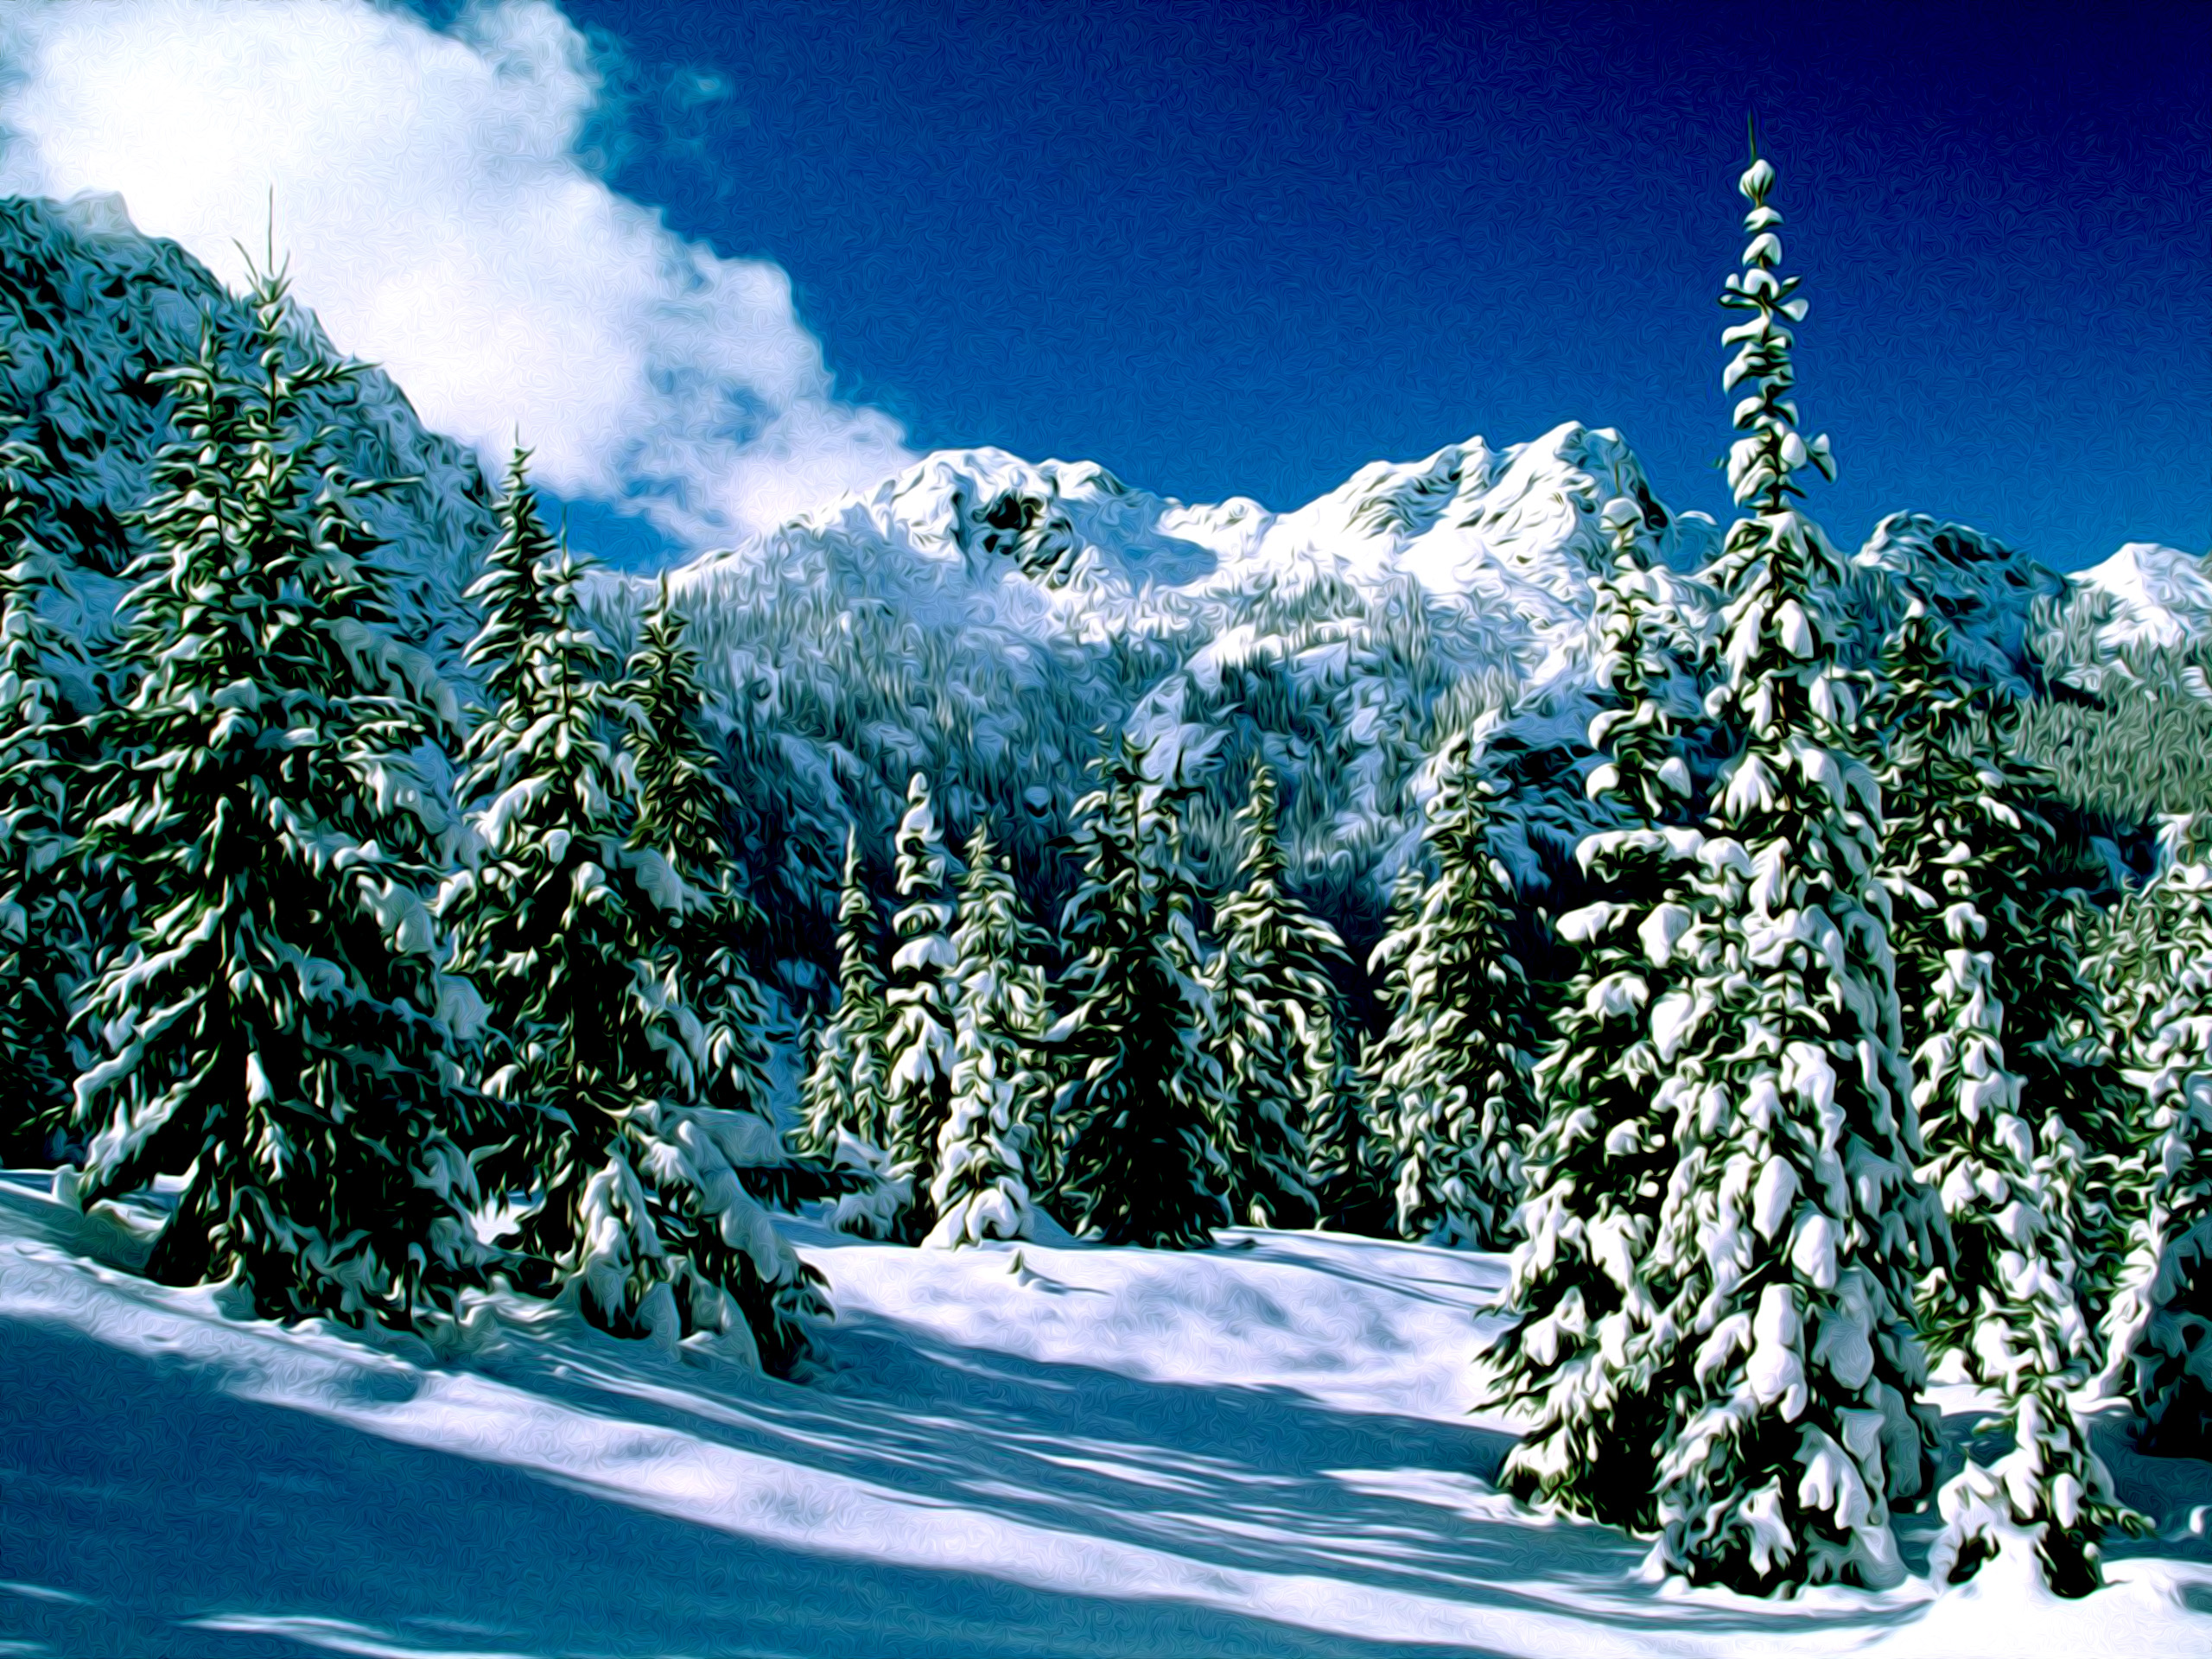 Winter Nature Snow Scene Free Desktop Wallpapers for Widescreen HD